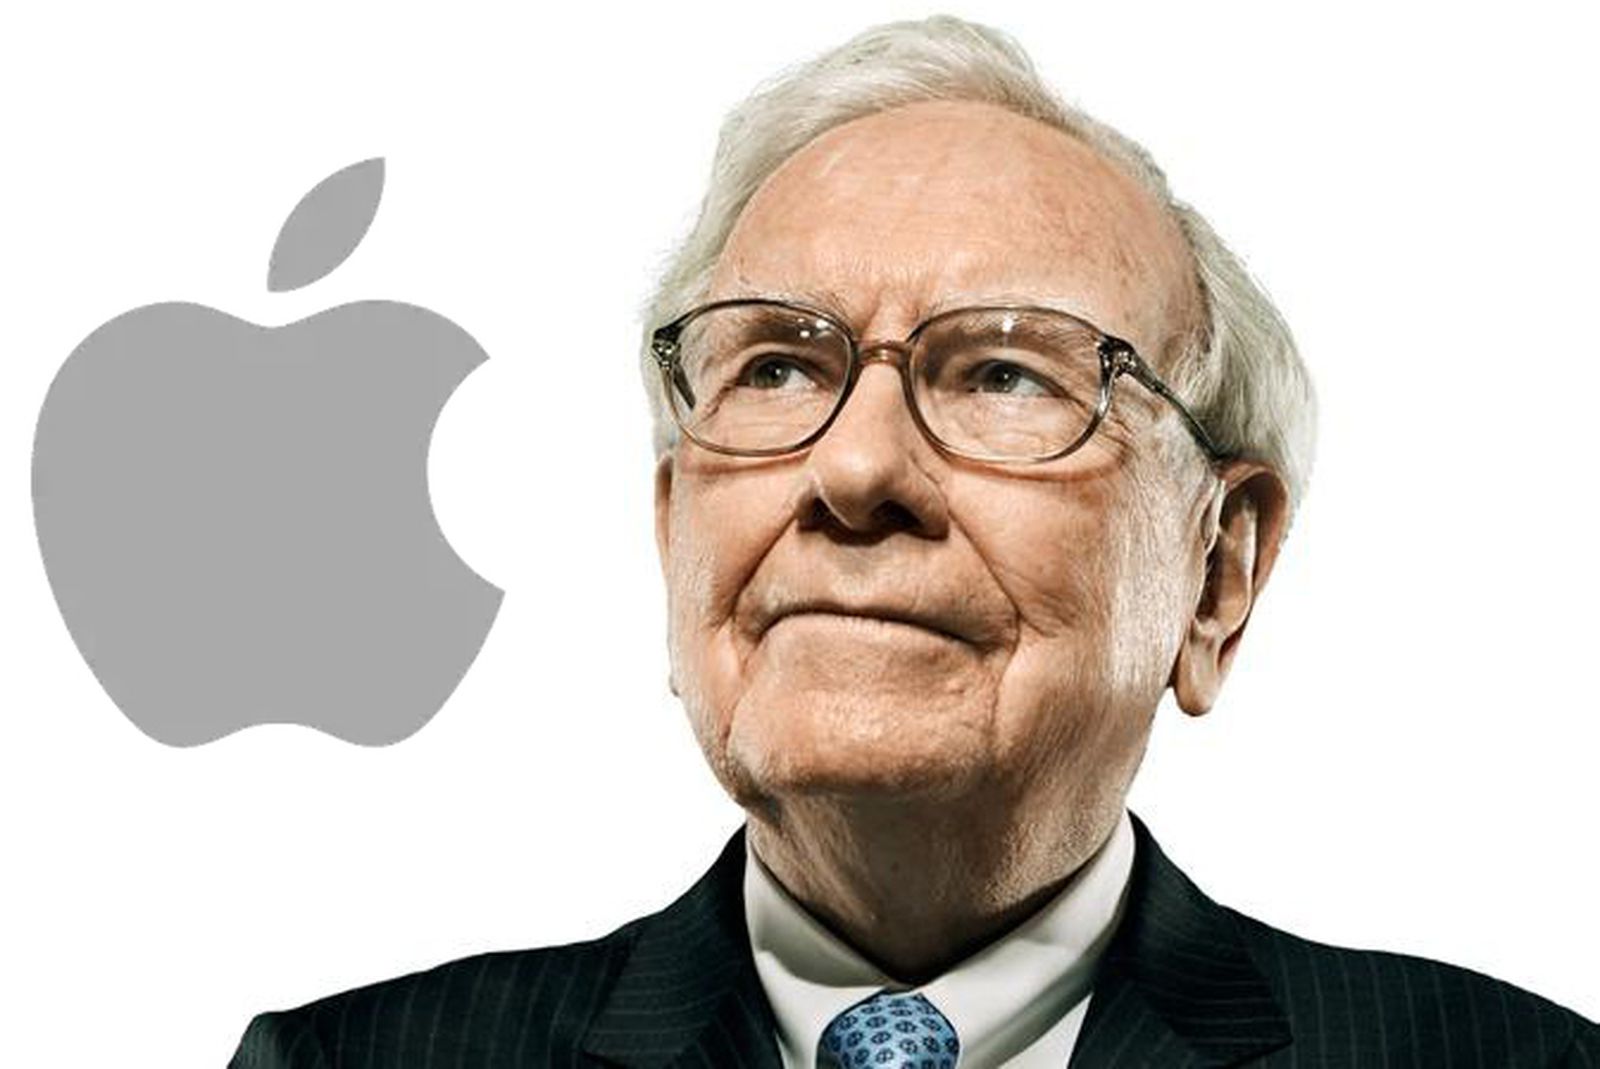 Warren Buffett's Strategic Sale of Apple Shares: A Glimpse into Future Tax Implications